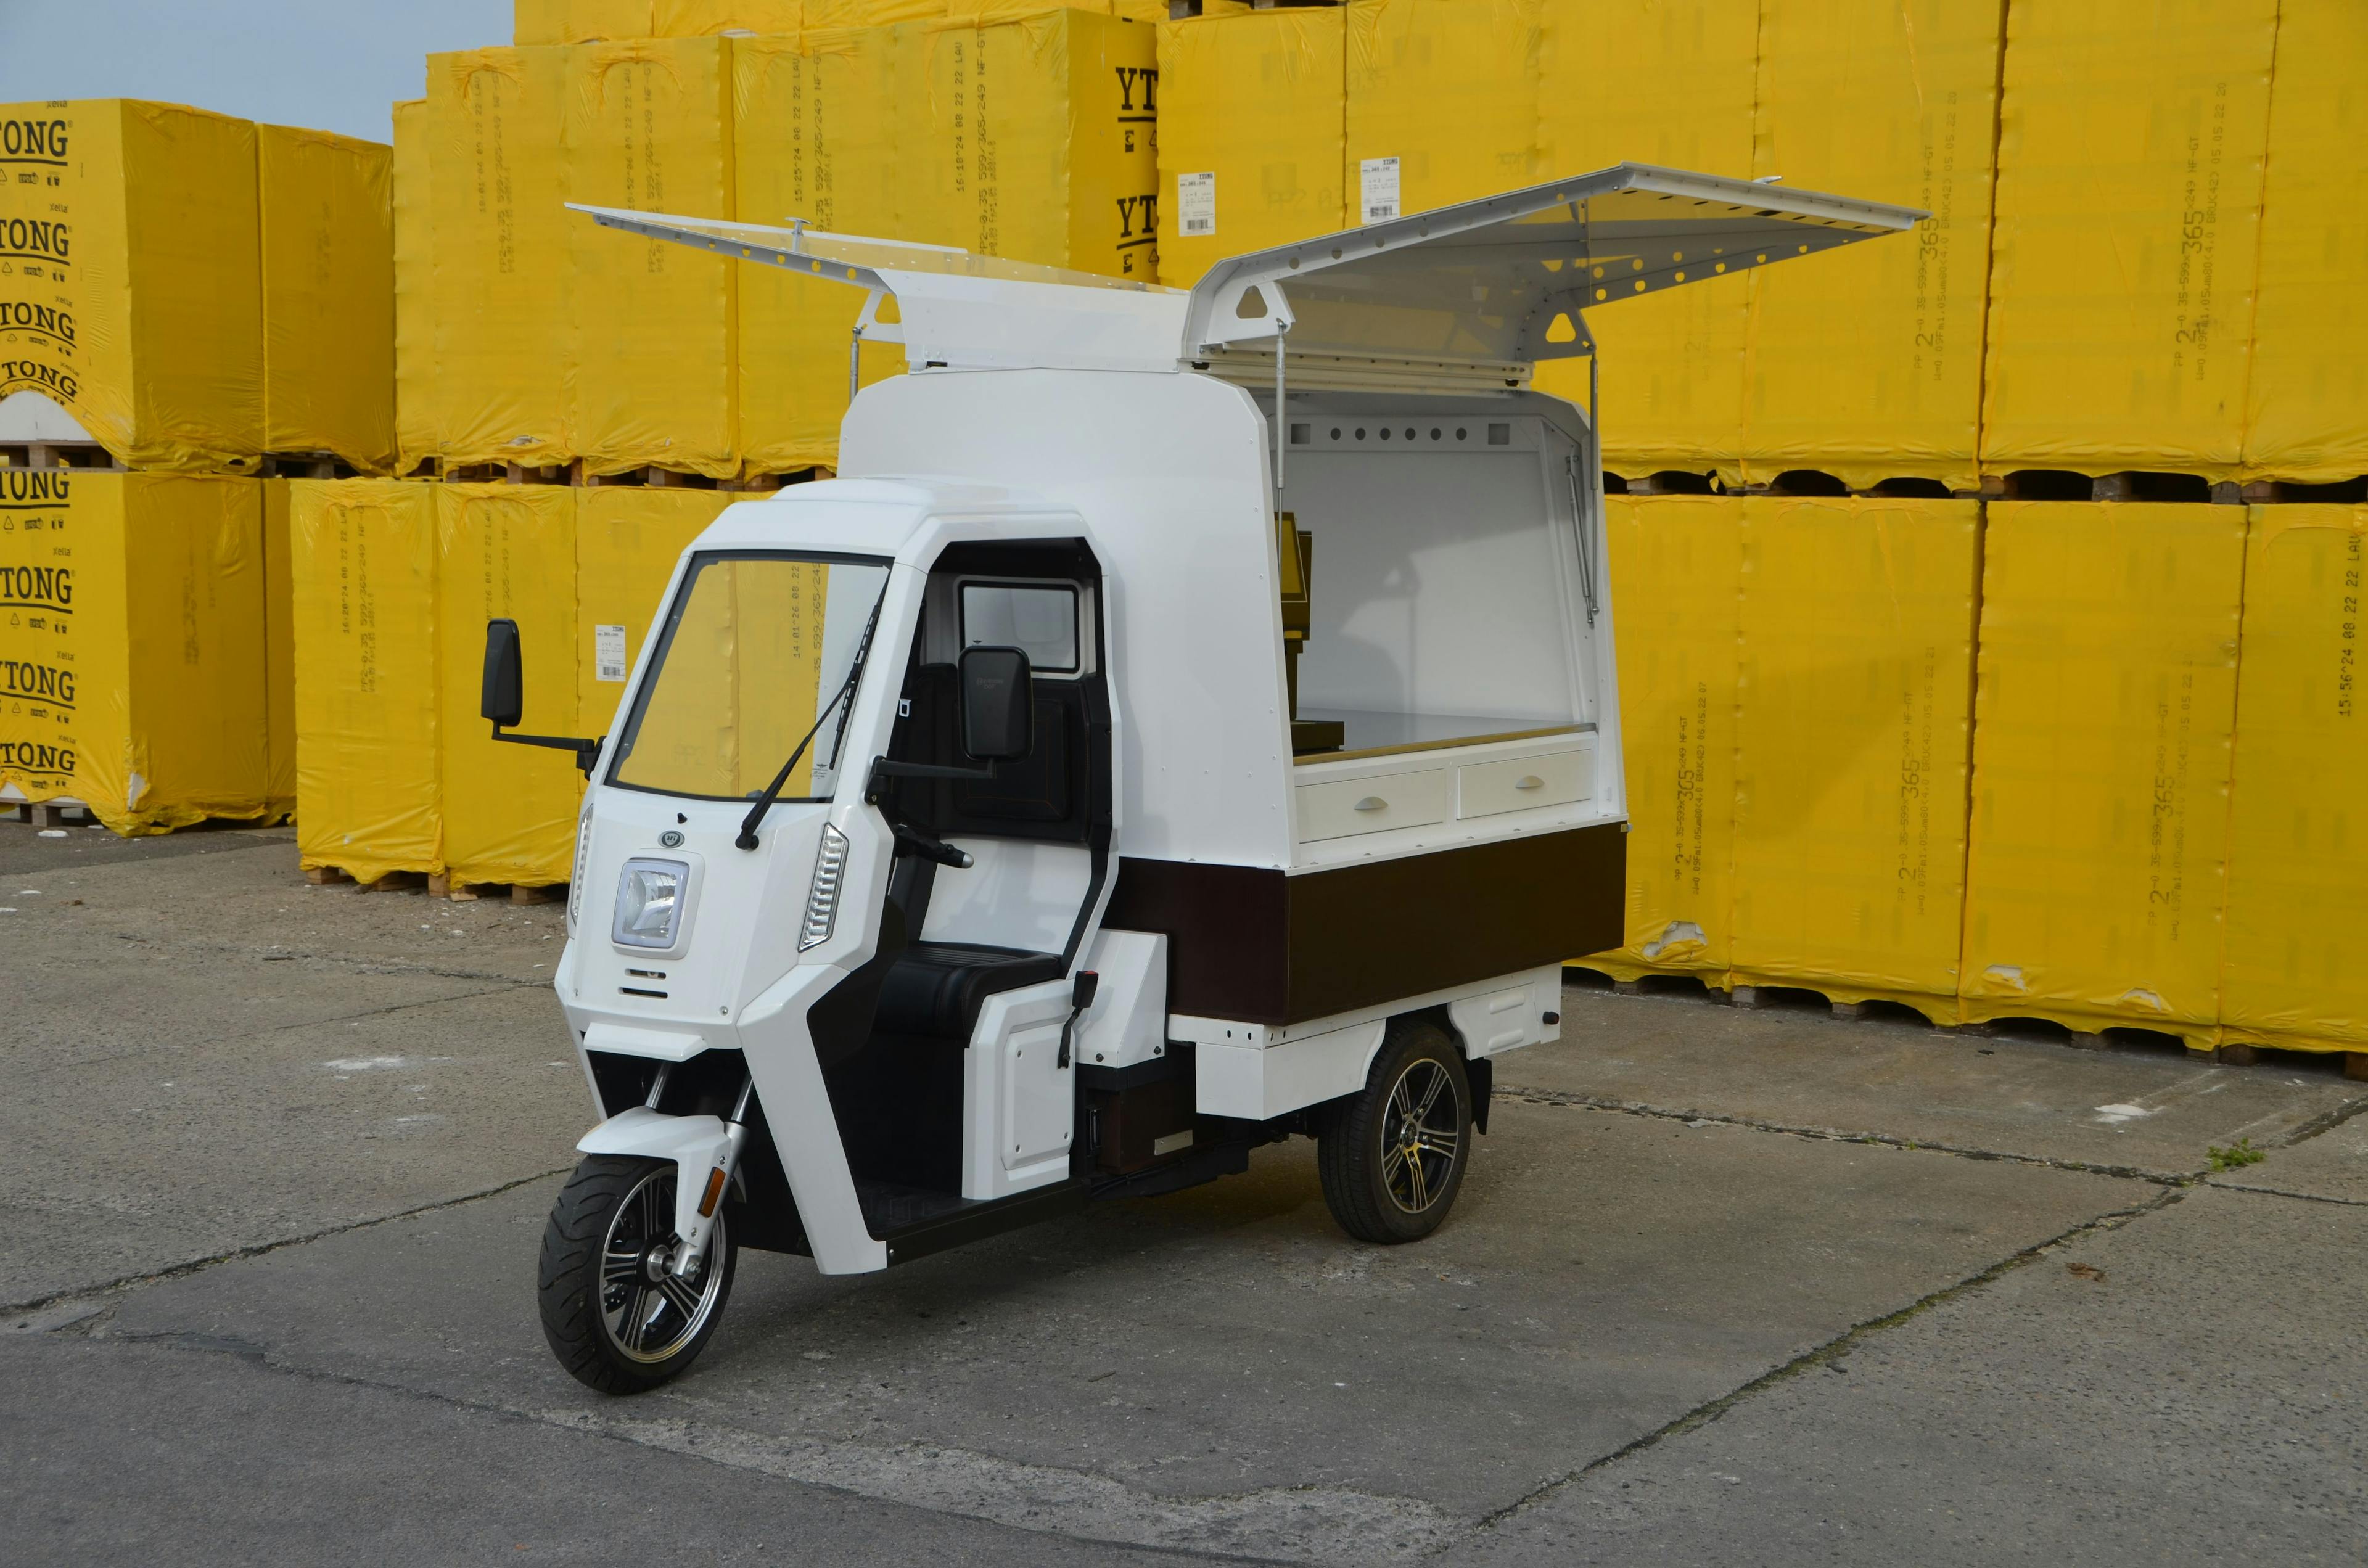 Motocarro elettrico ARI 345 Food Truck